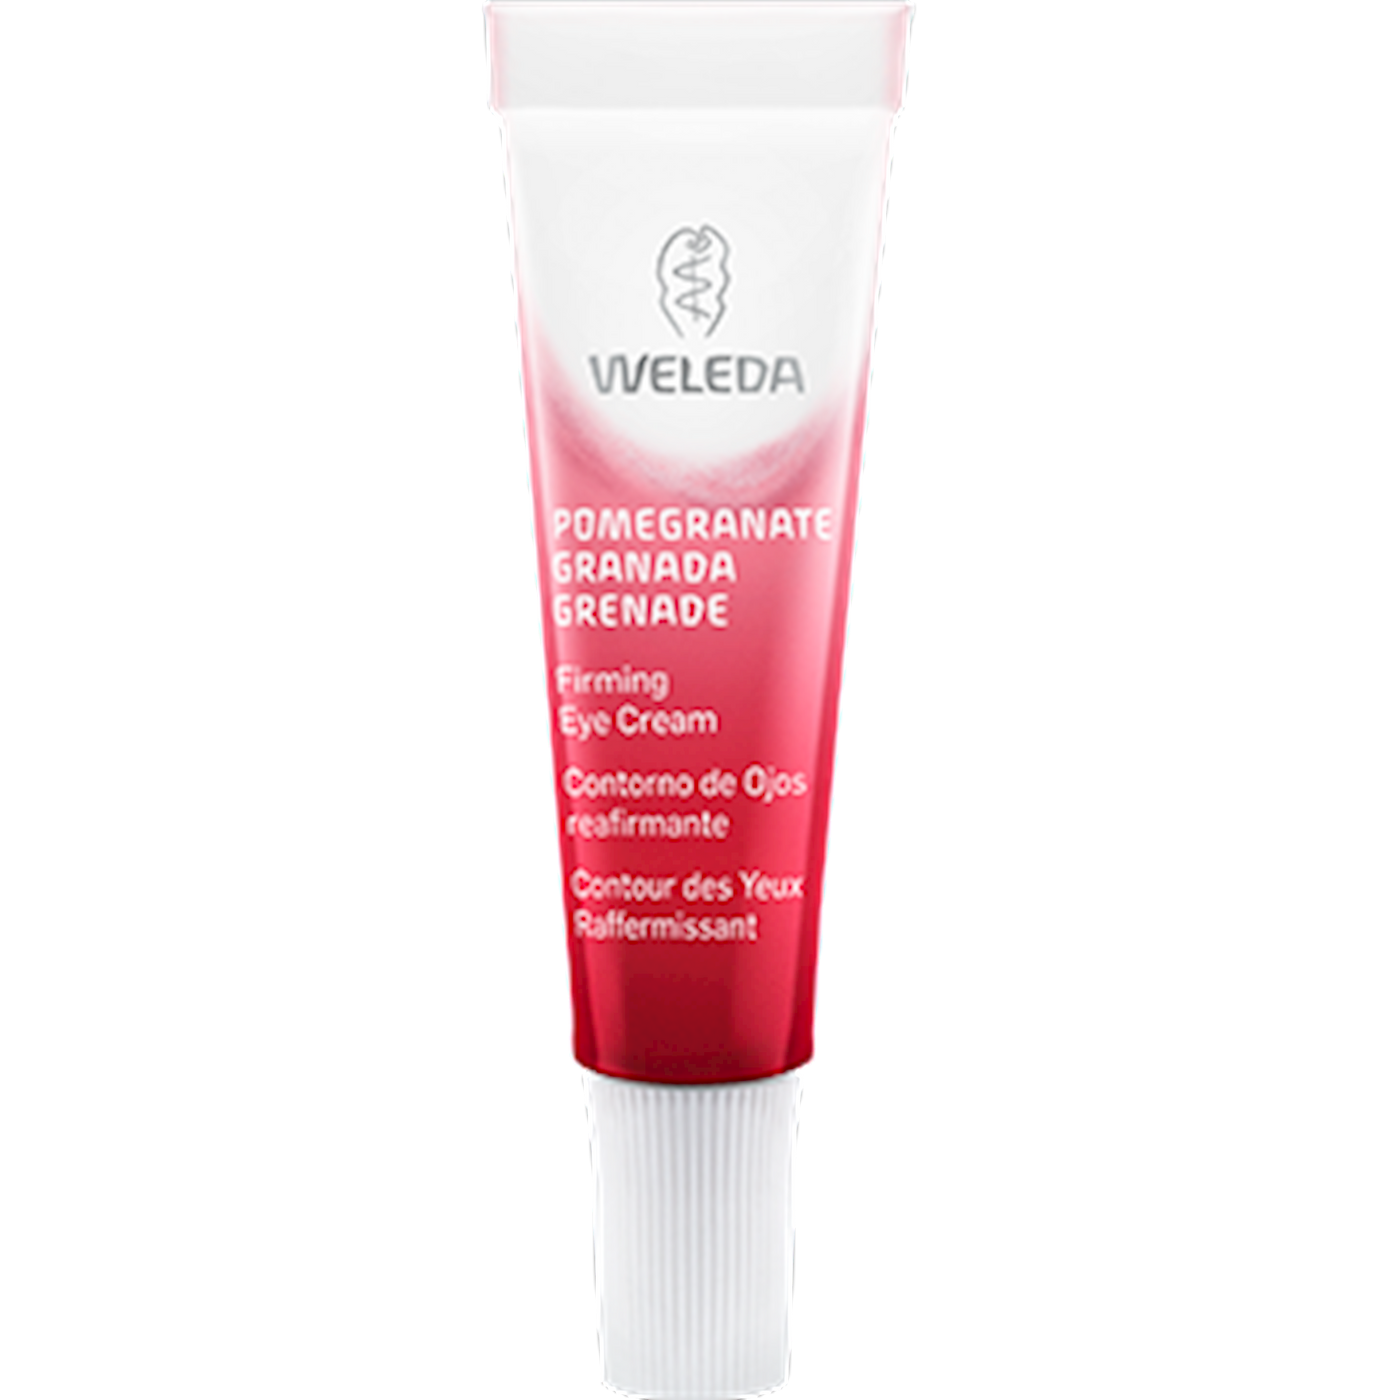 Pomegranate Firming Eye Cream .34 oz Curated Wellness